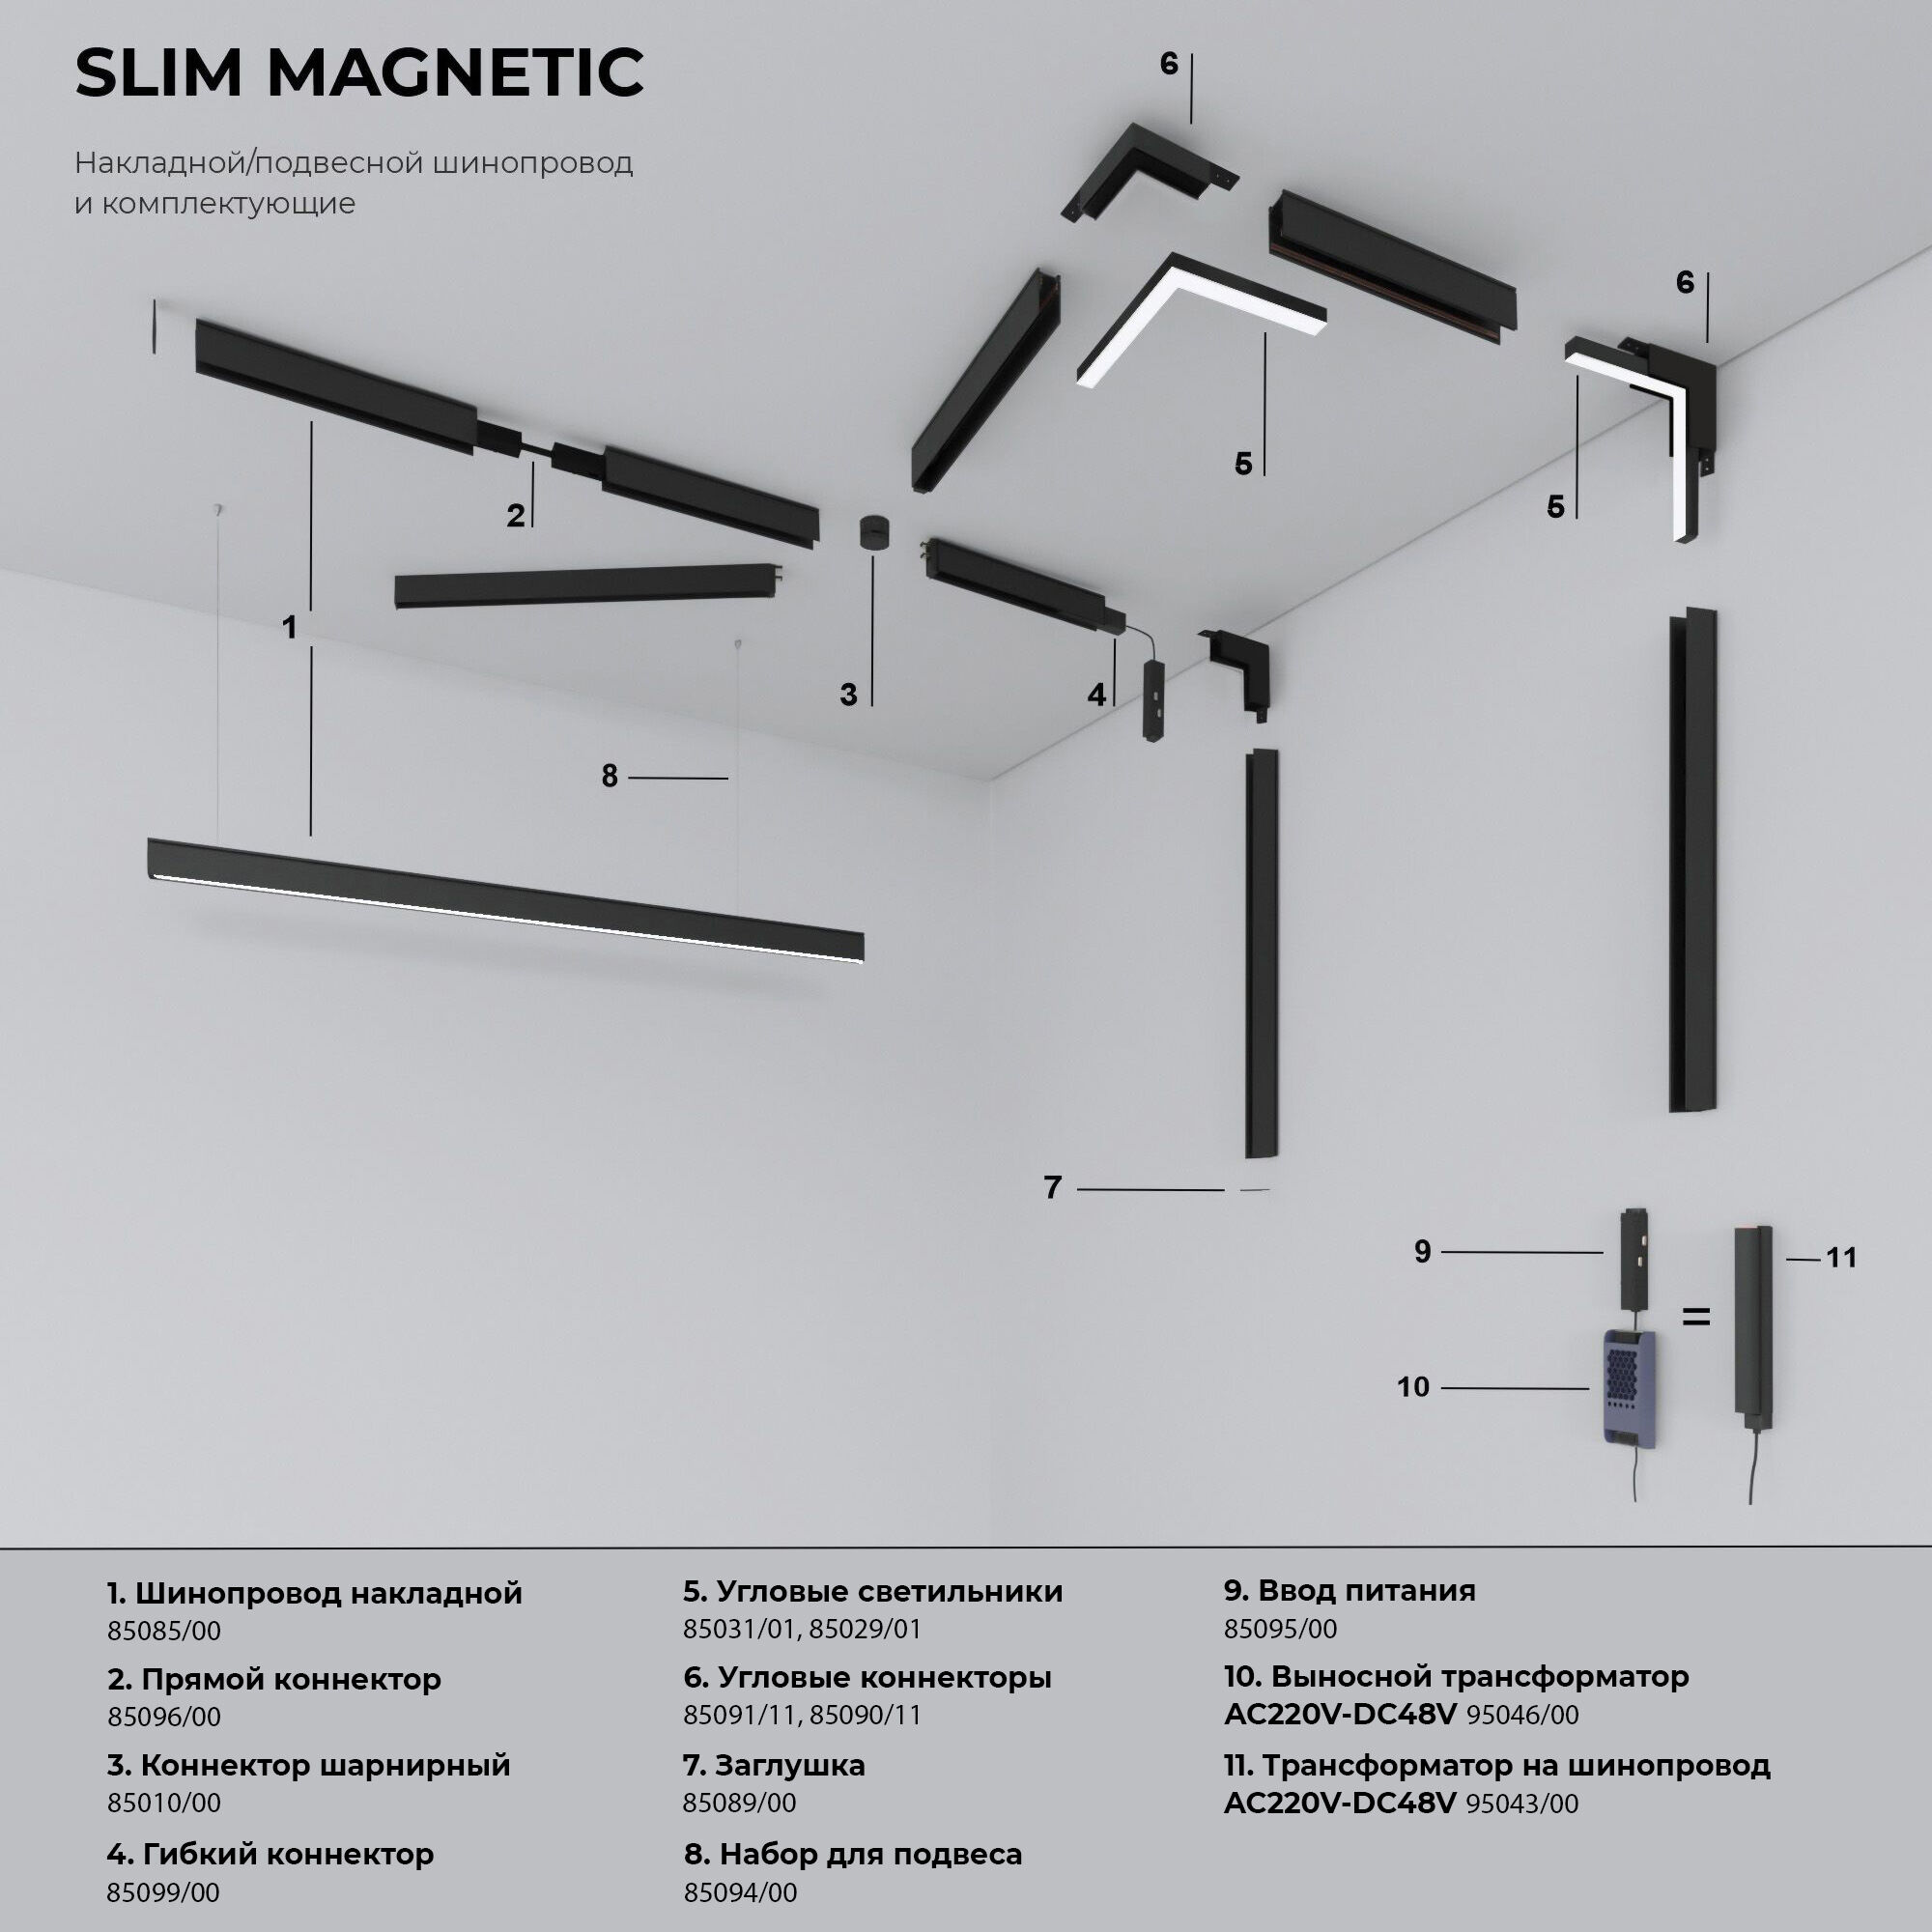 Slim Magnetic Шинопровод Round накладной (2м) 85133/00